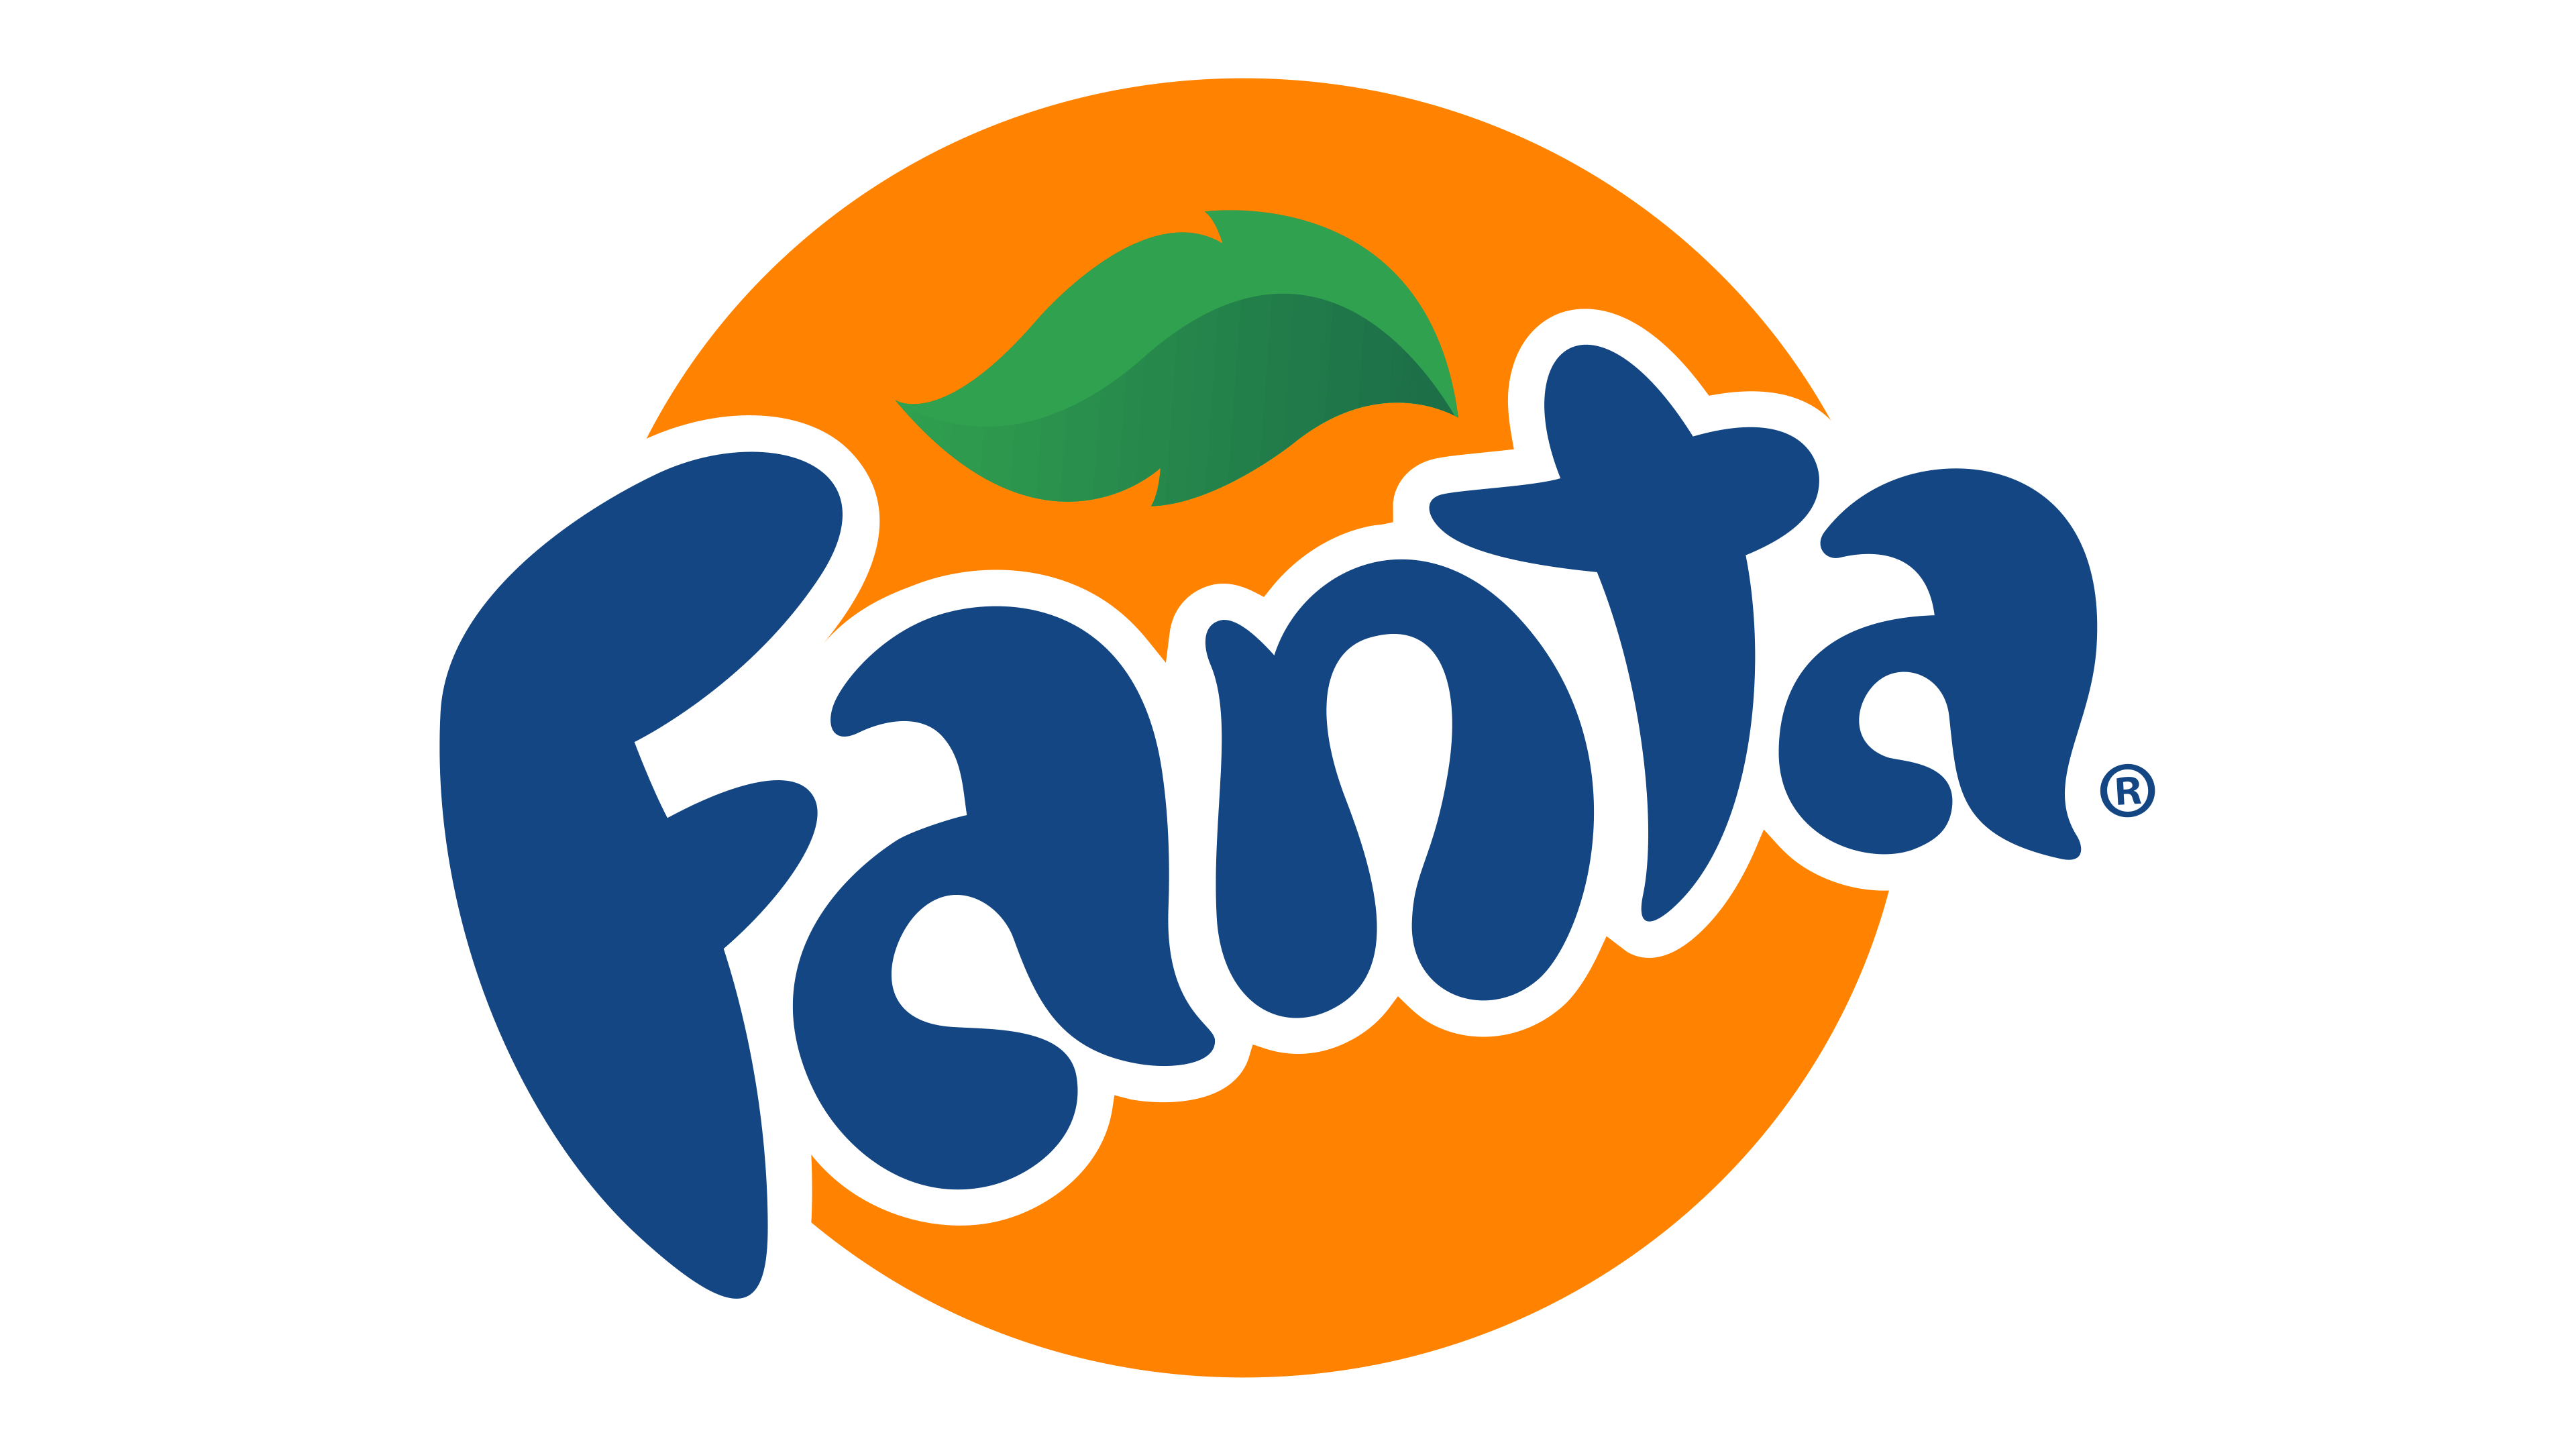 Fanta Logo